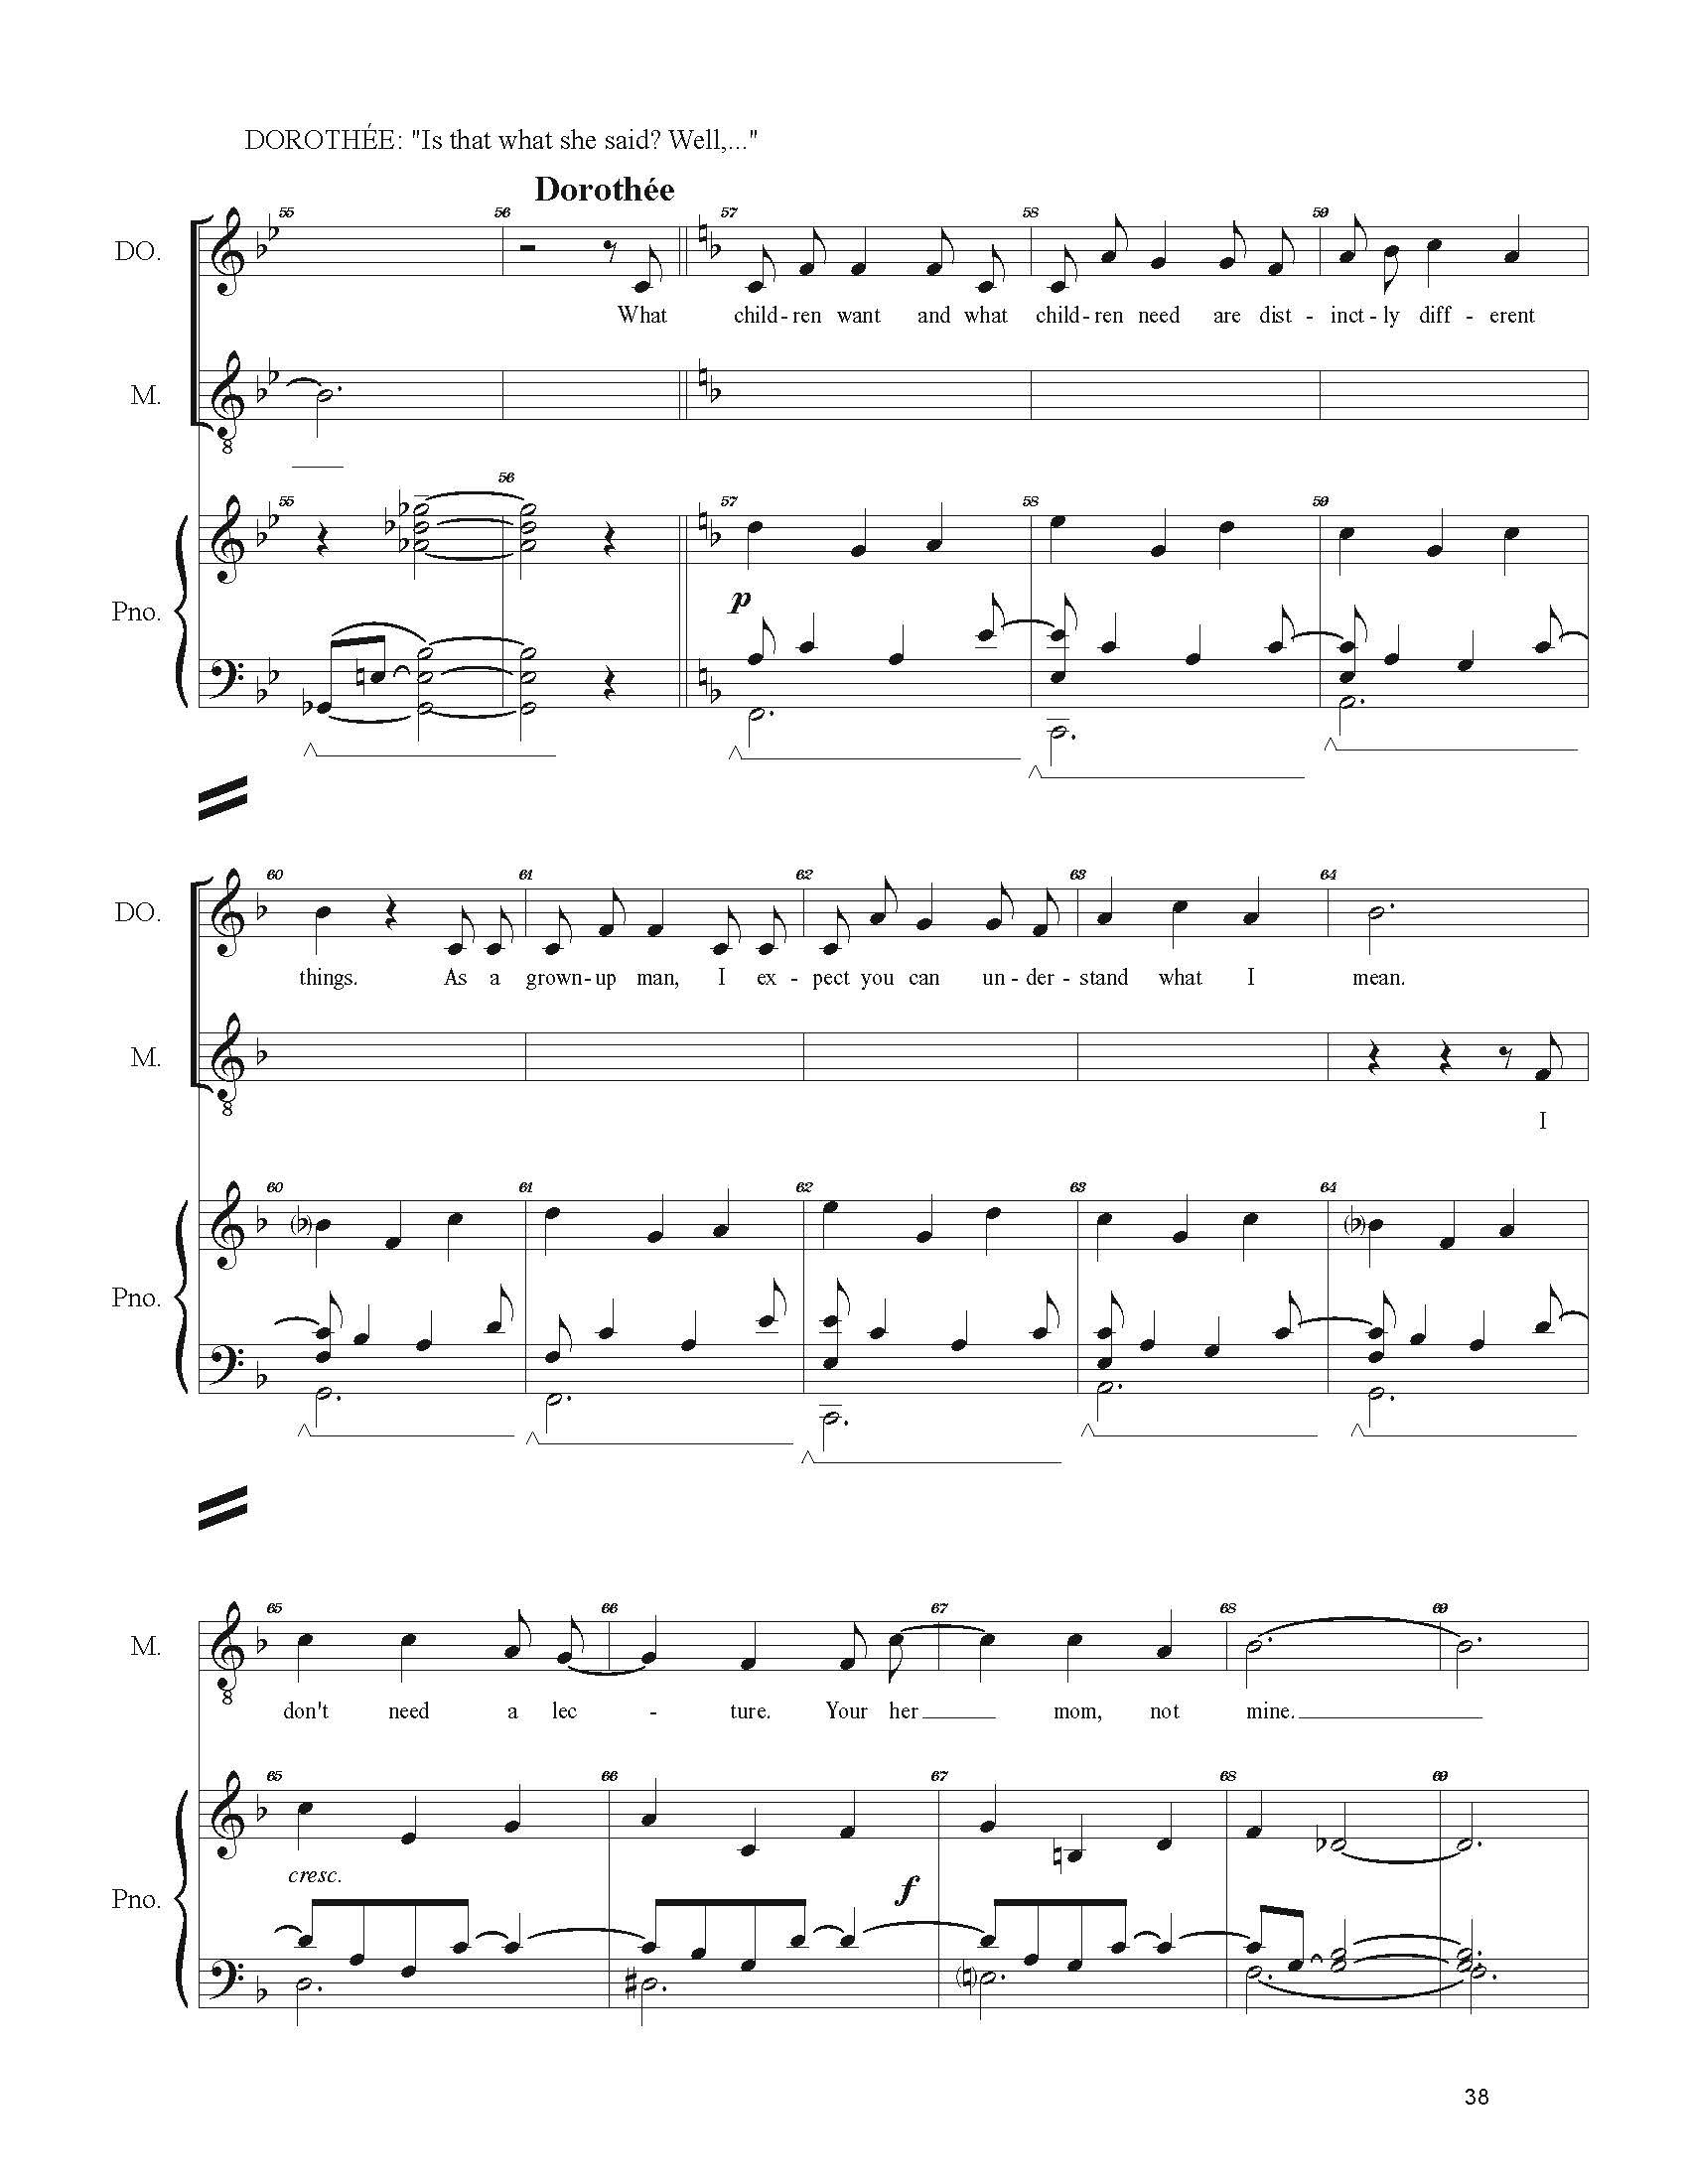 FULL PIANO VOCAL SCORE DRAFT 1 - Score_Page_038.jpg